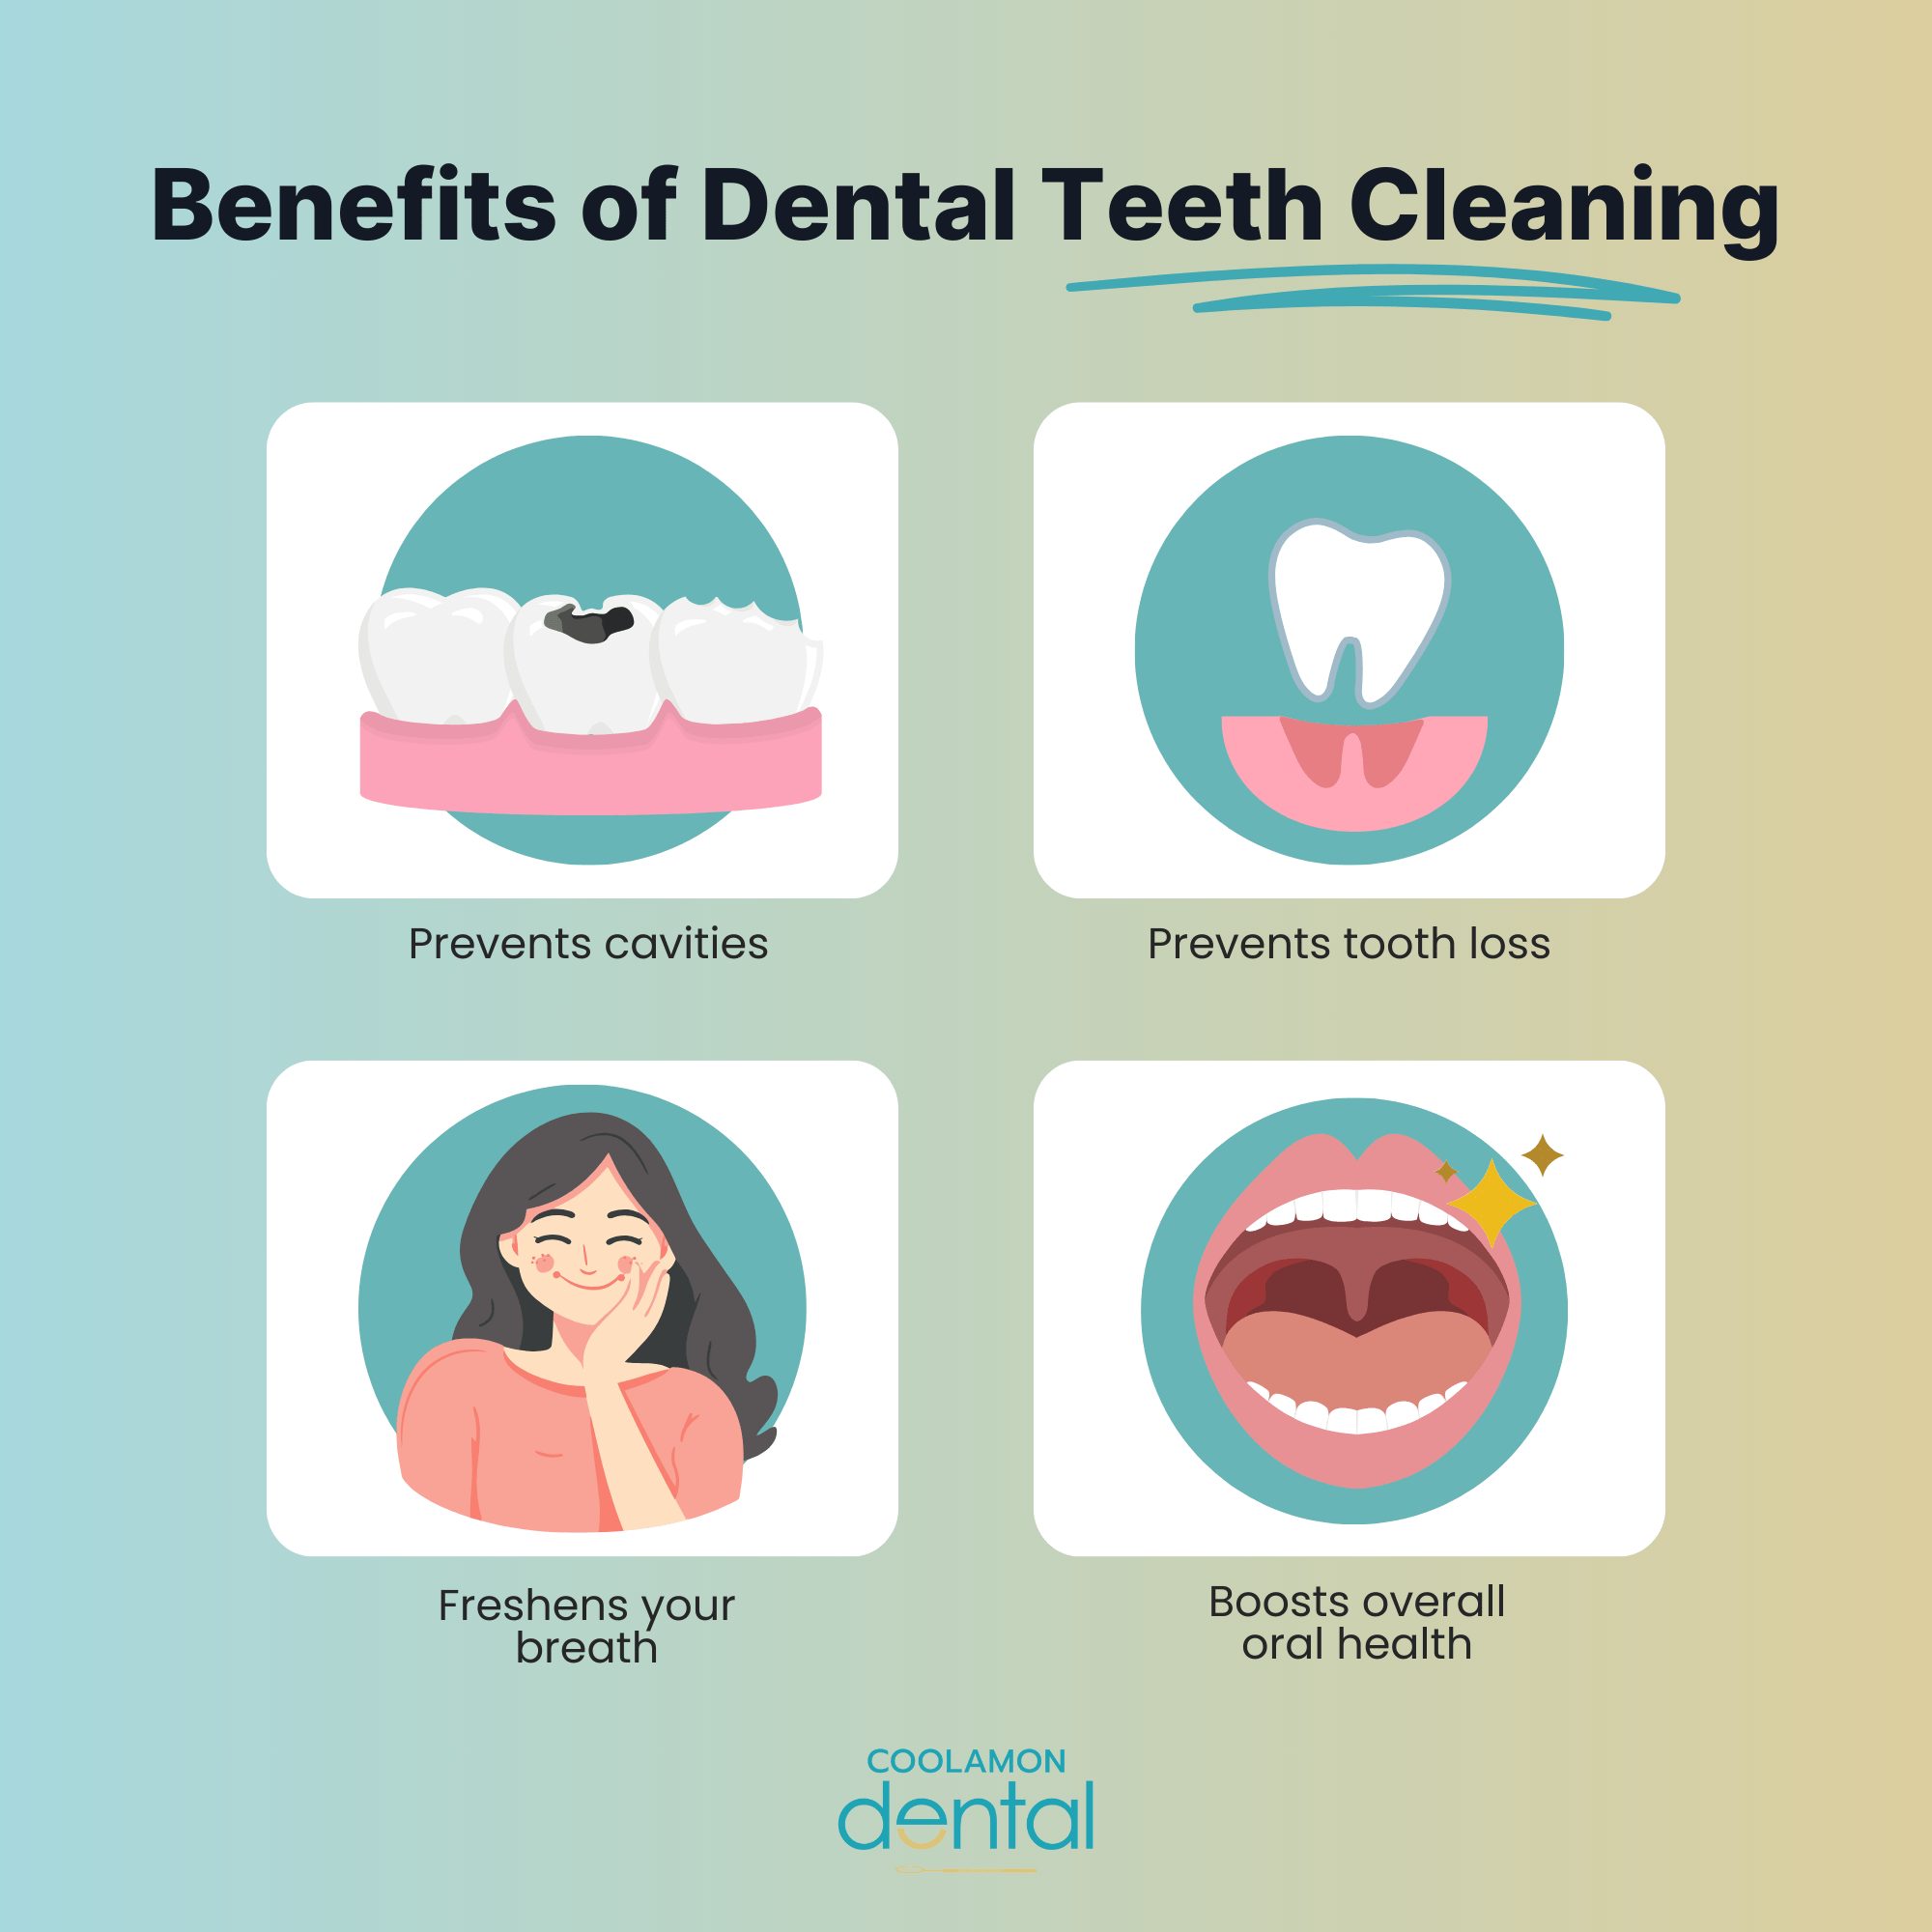 Benefits of Dental Teeth Cleaning